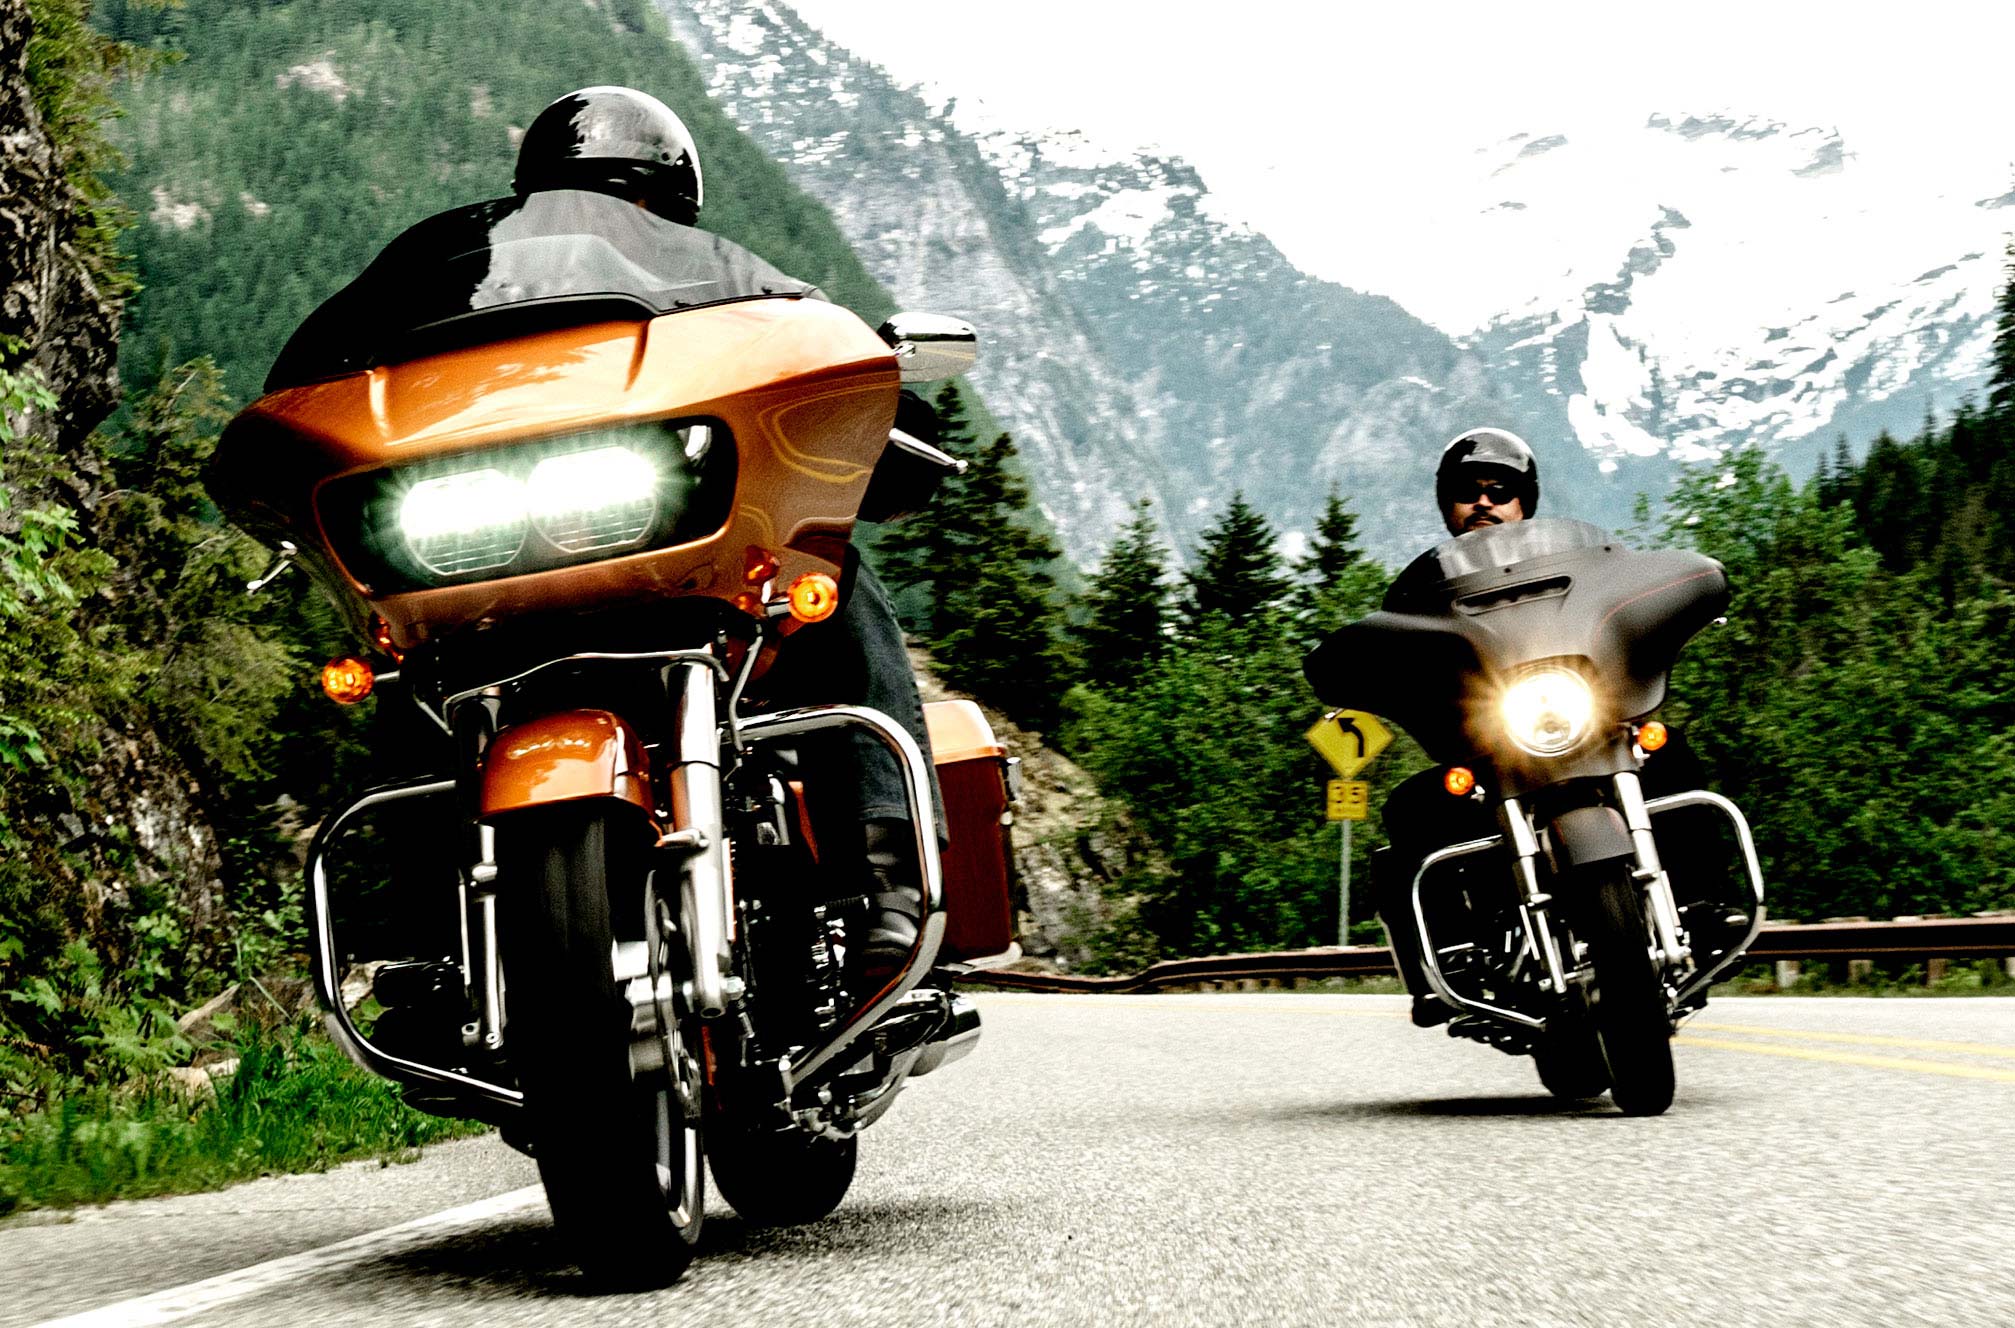 2015 Harley Davidson Road Glide Review